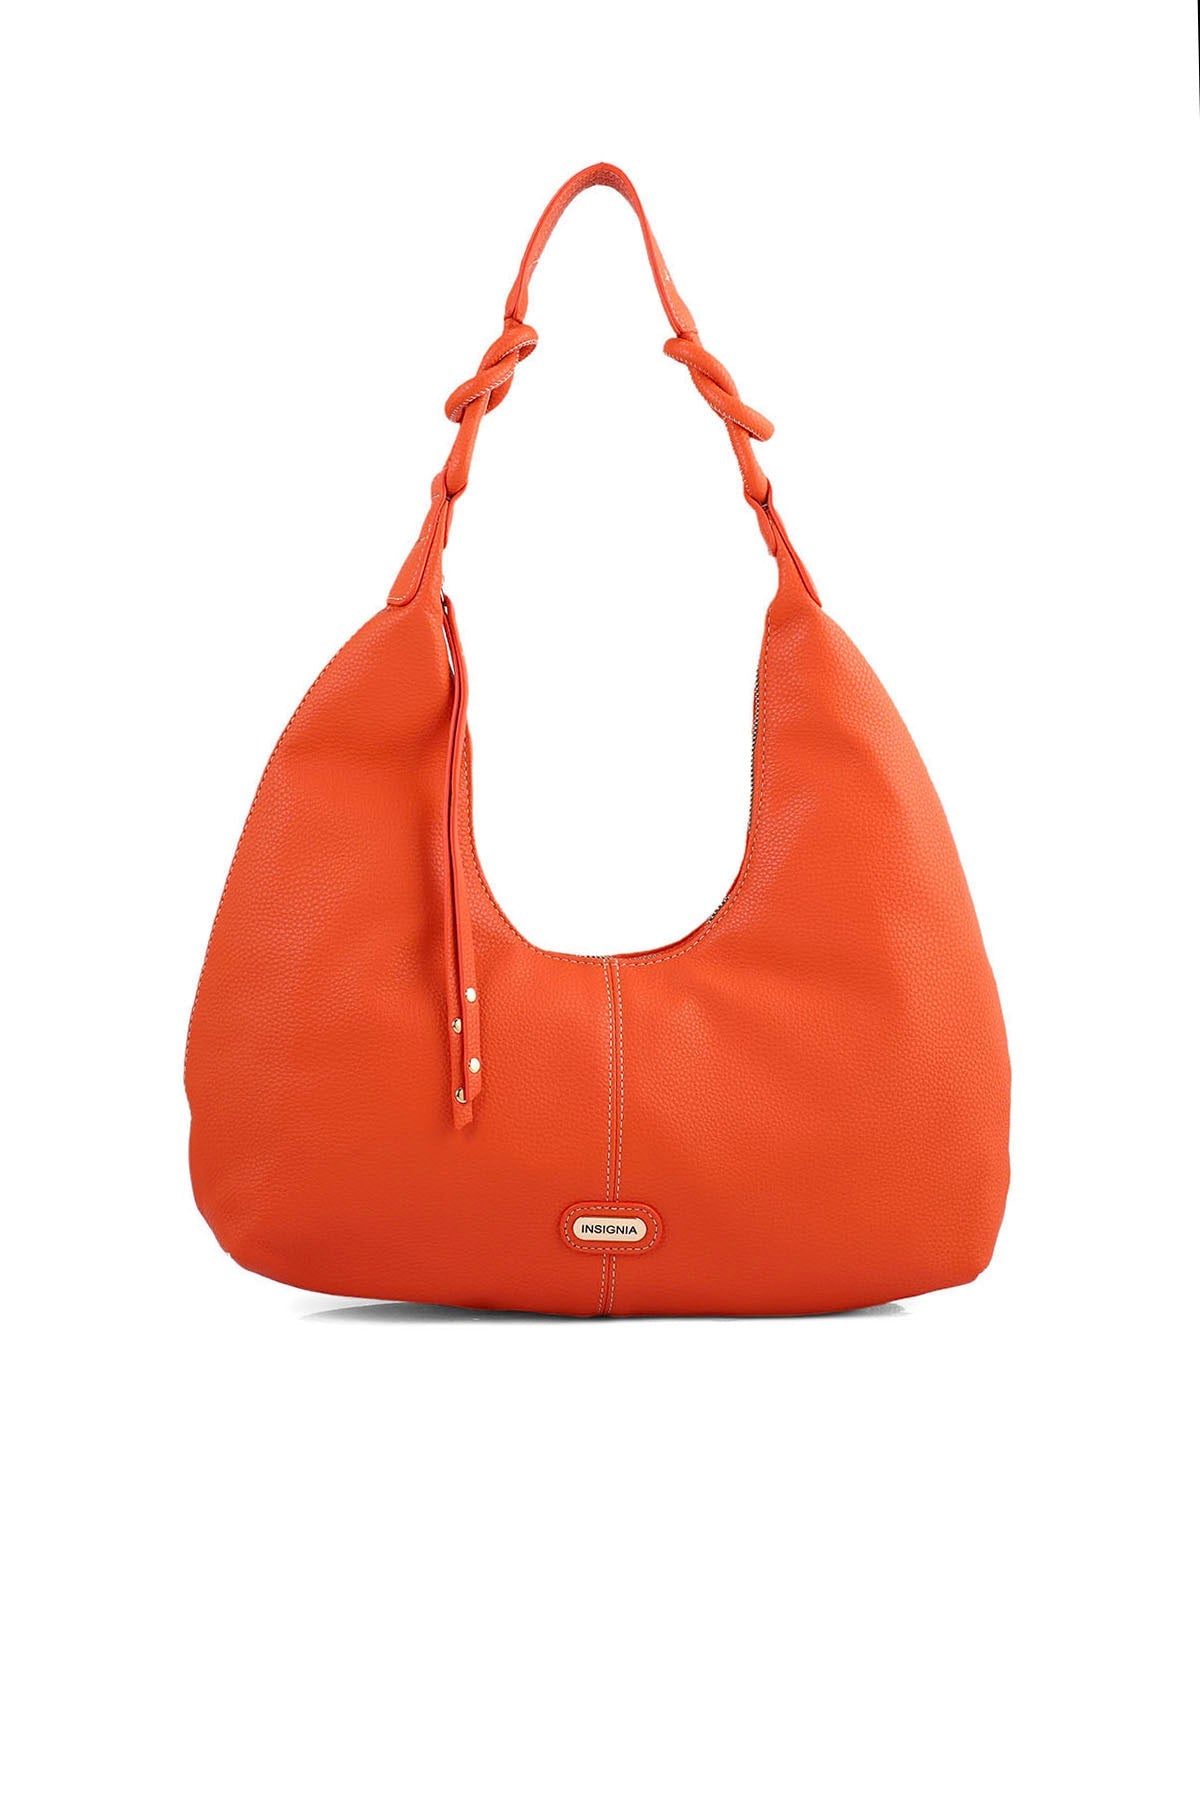 Hobo Hand Bags B15022-Orange